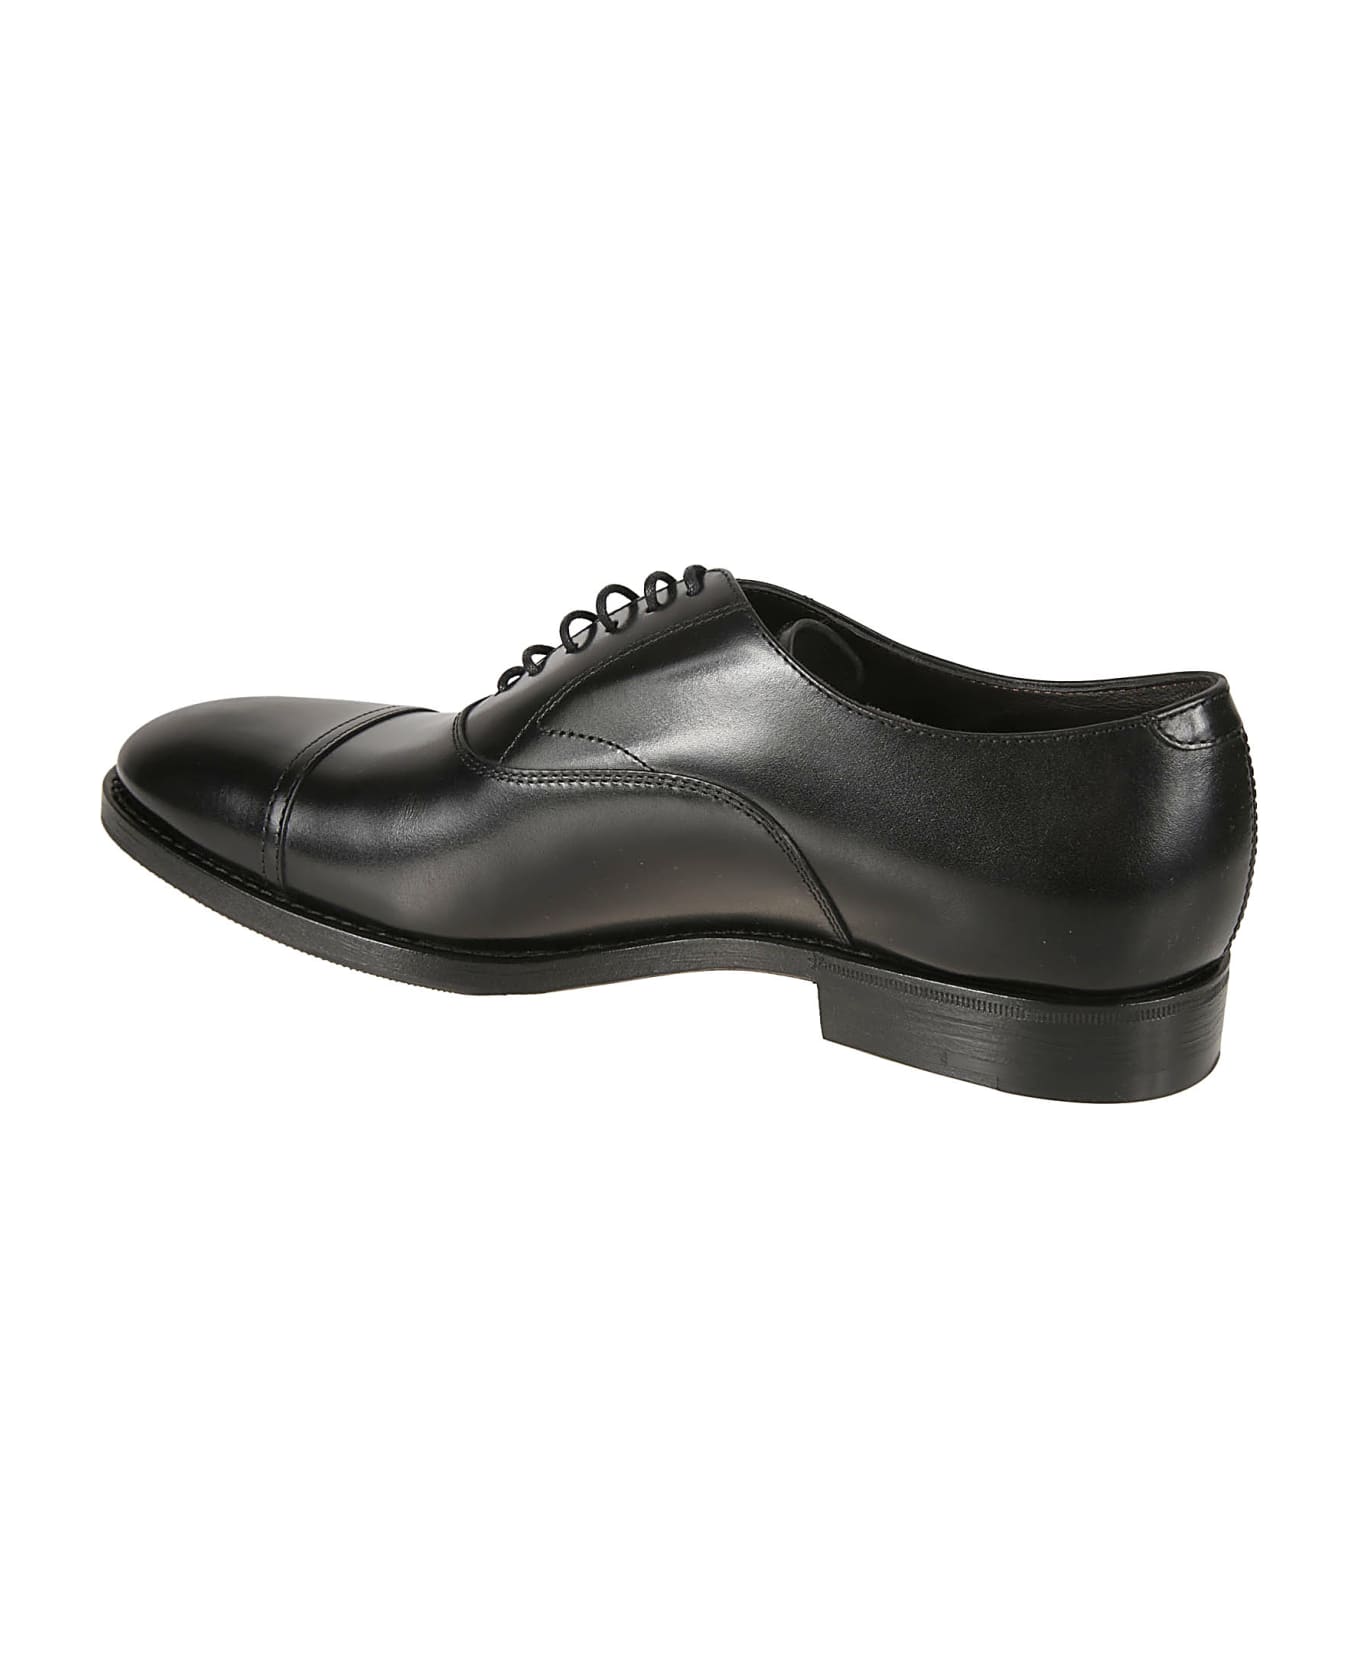 Henderson Baracco Classic Oxford Shoes - Black